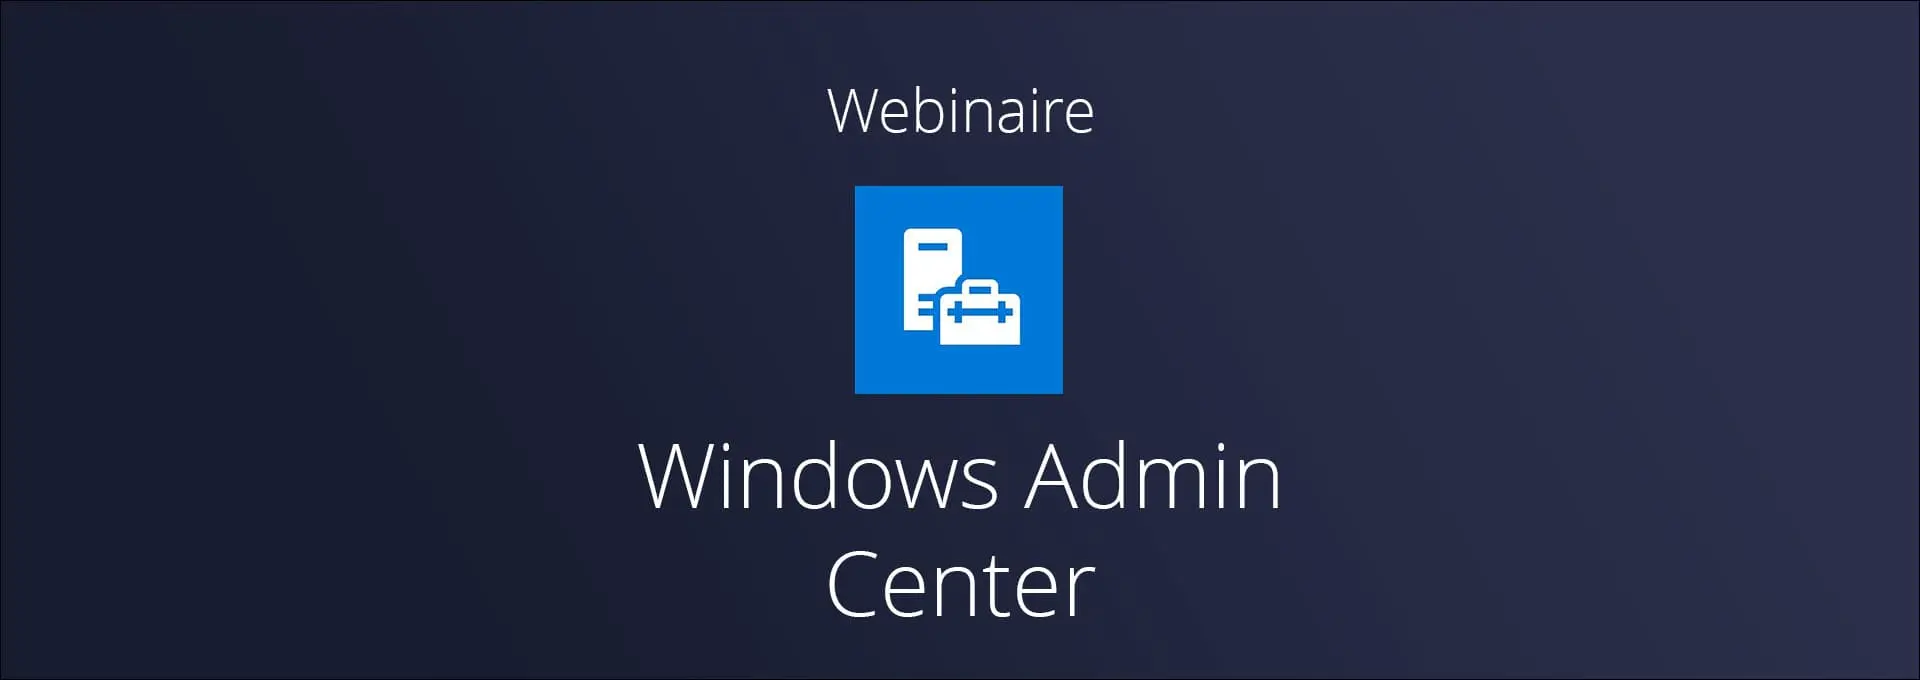 Actualités Webinaires - Windows Admin Center